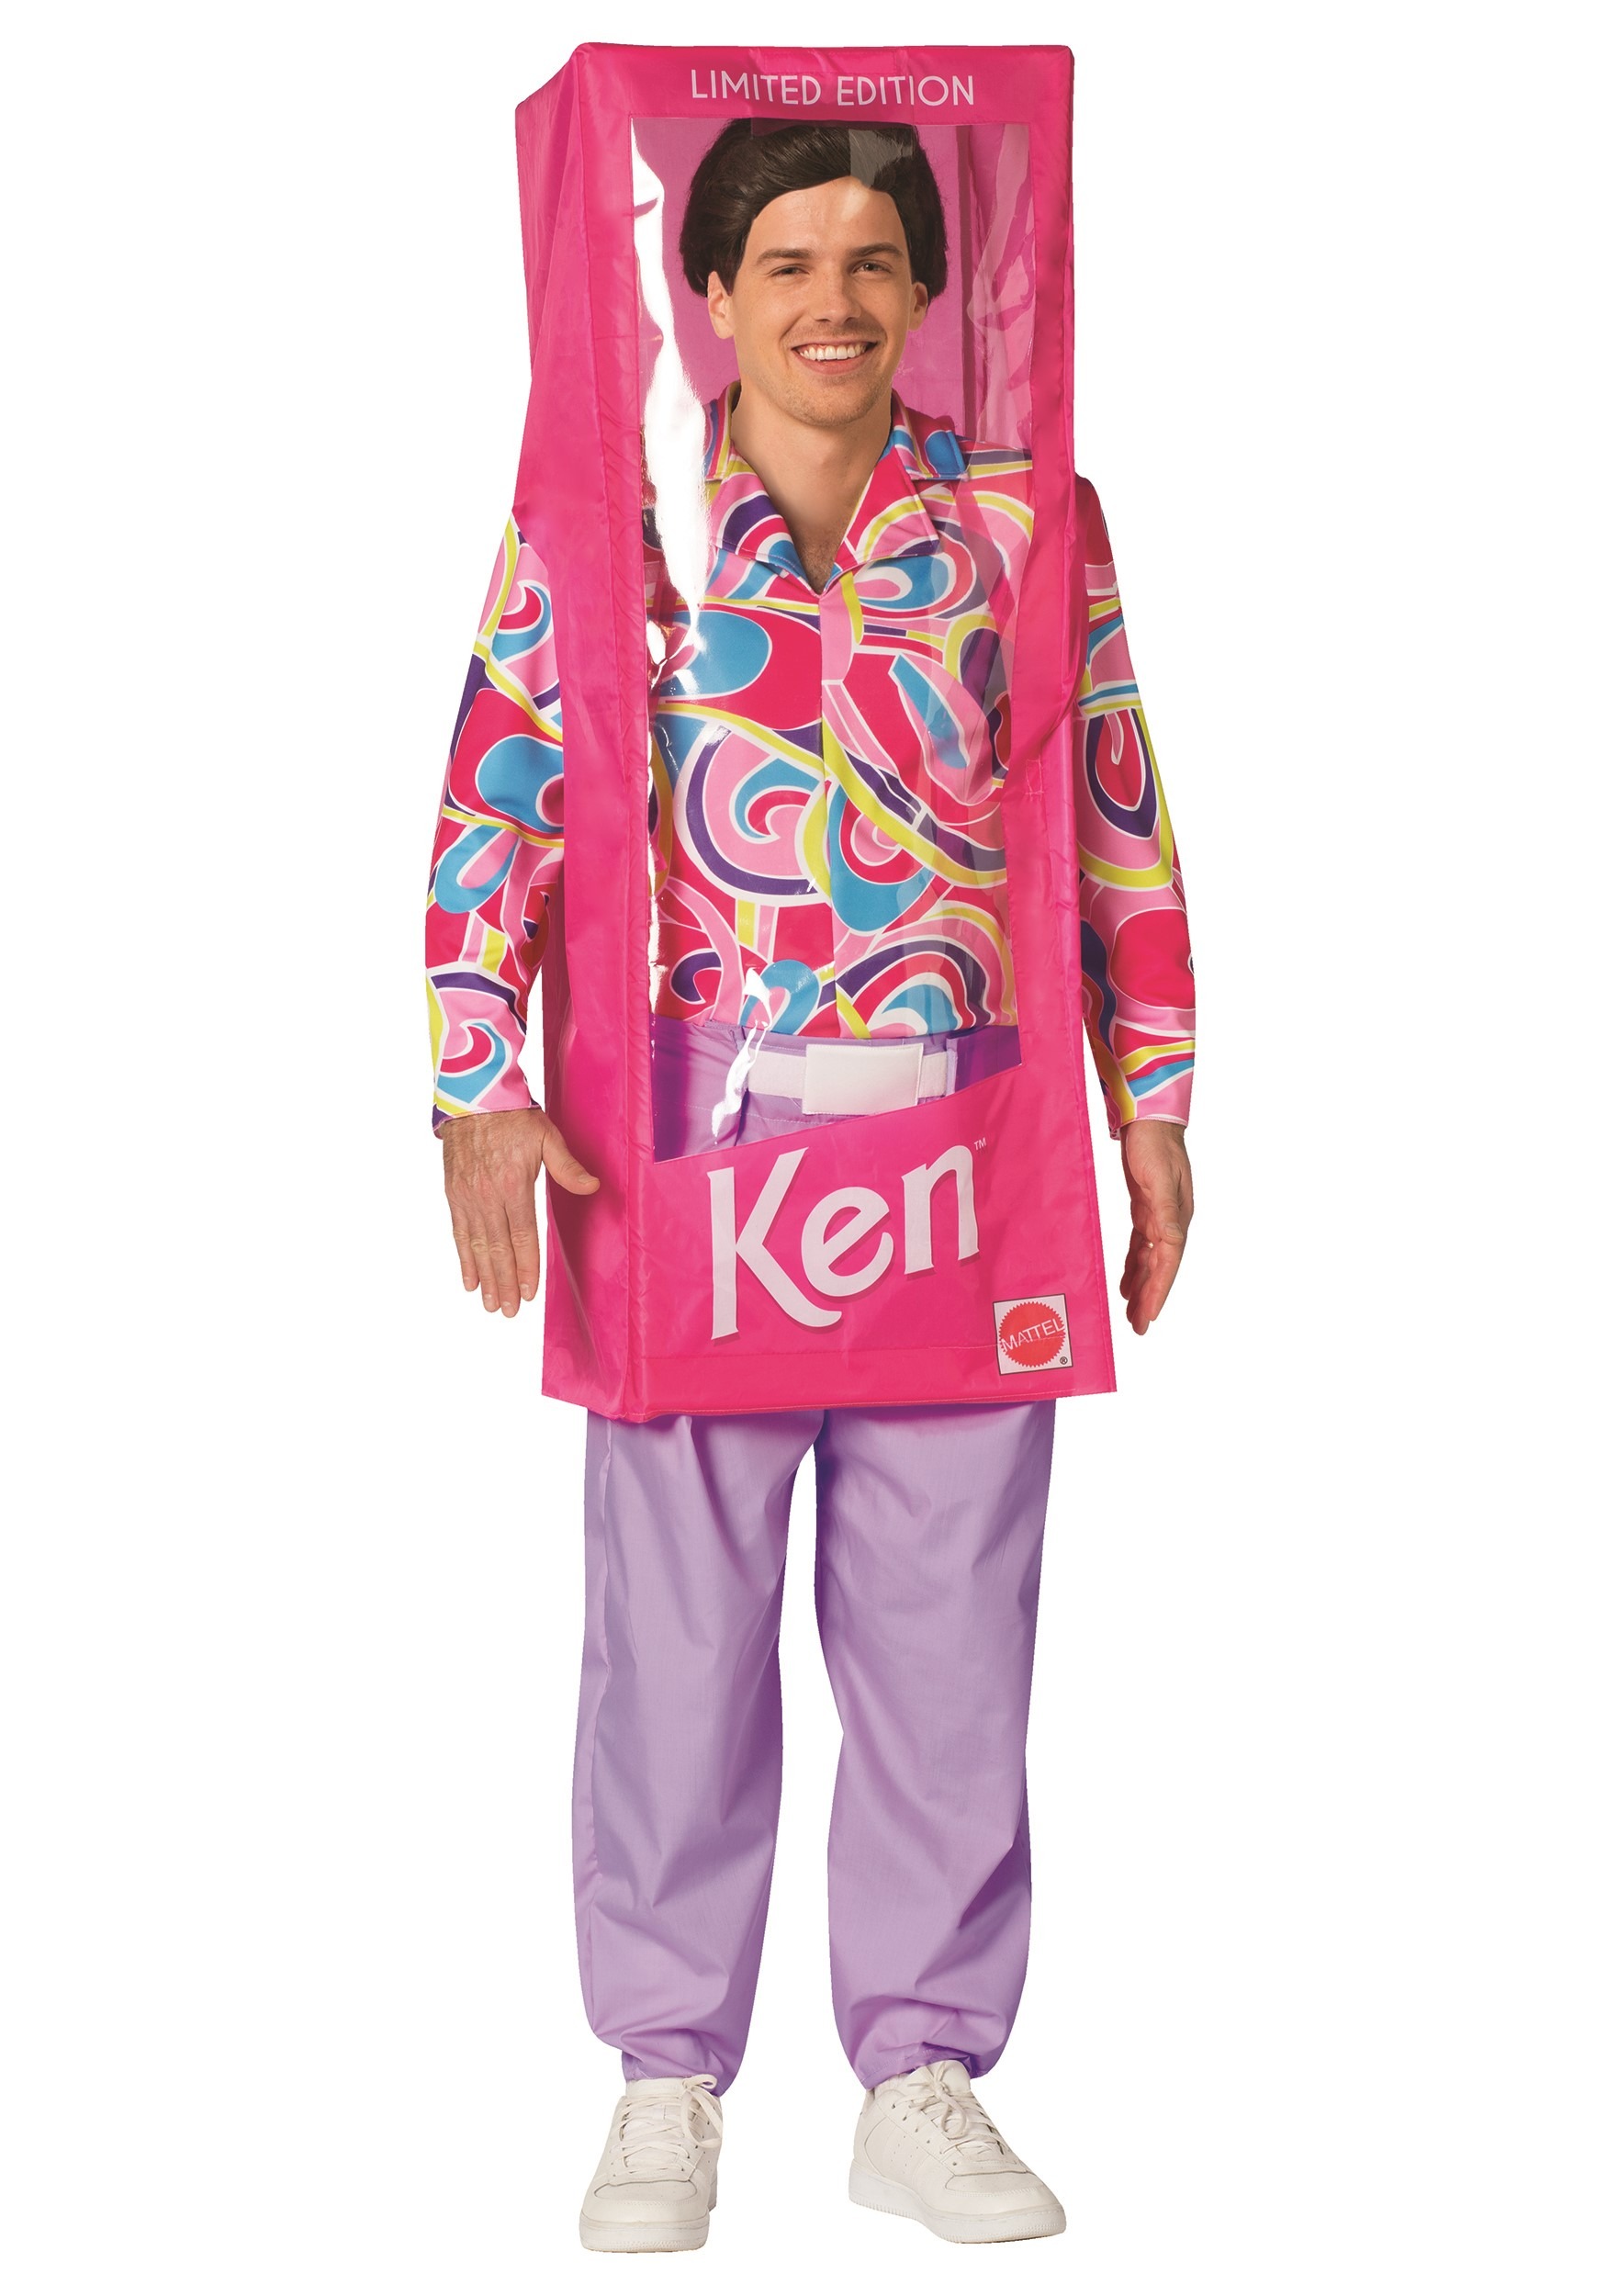 barbie and ken costume